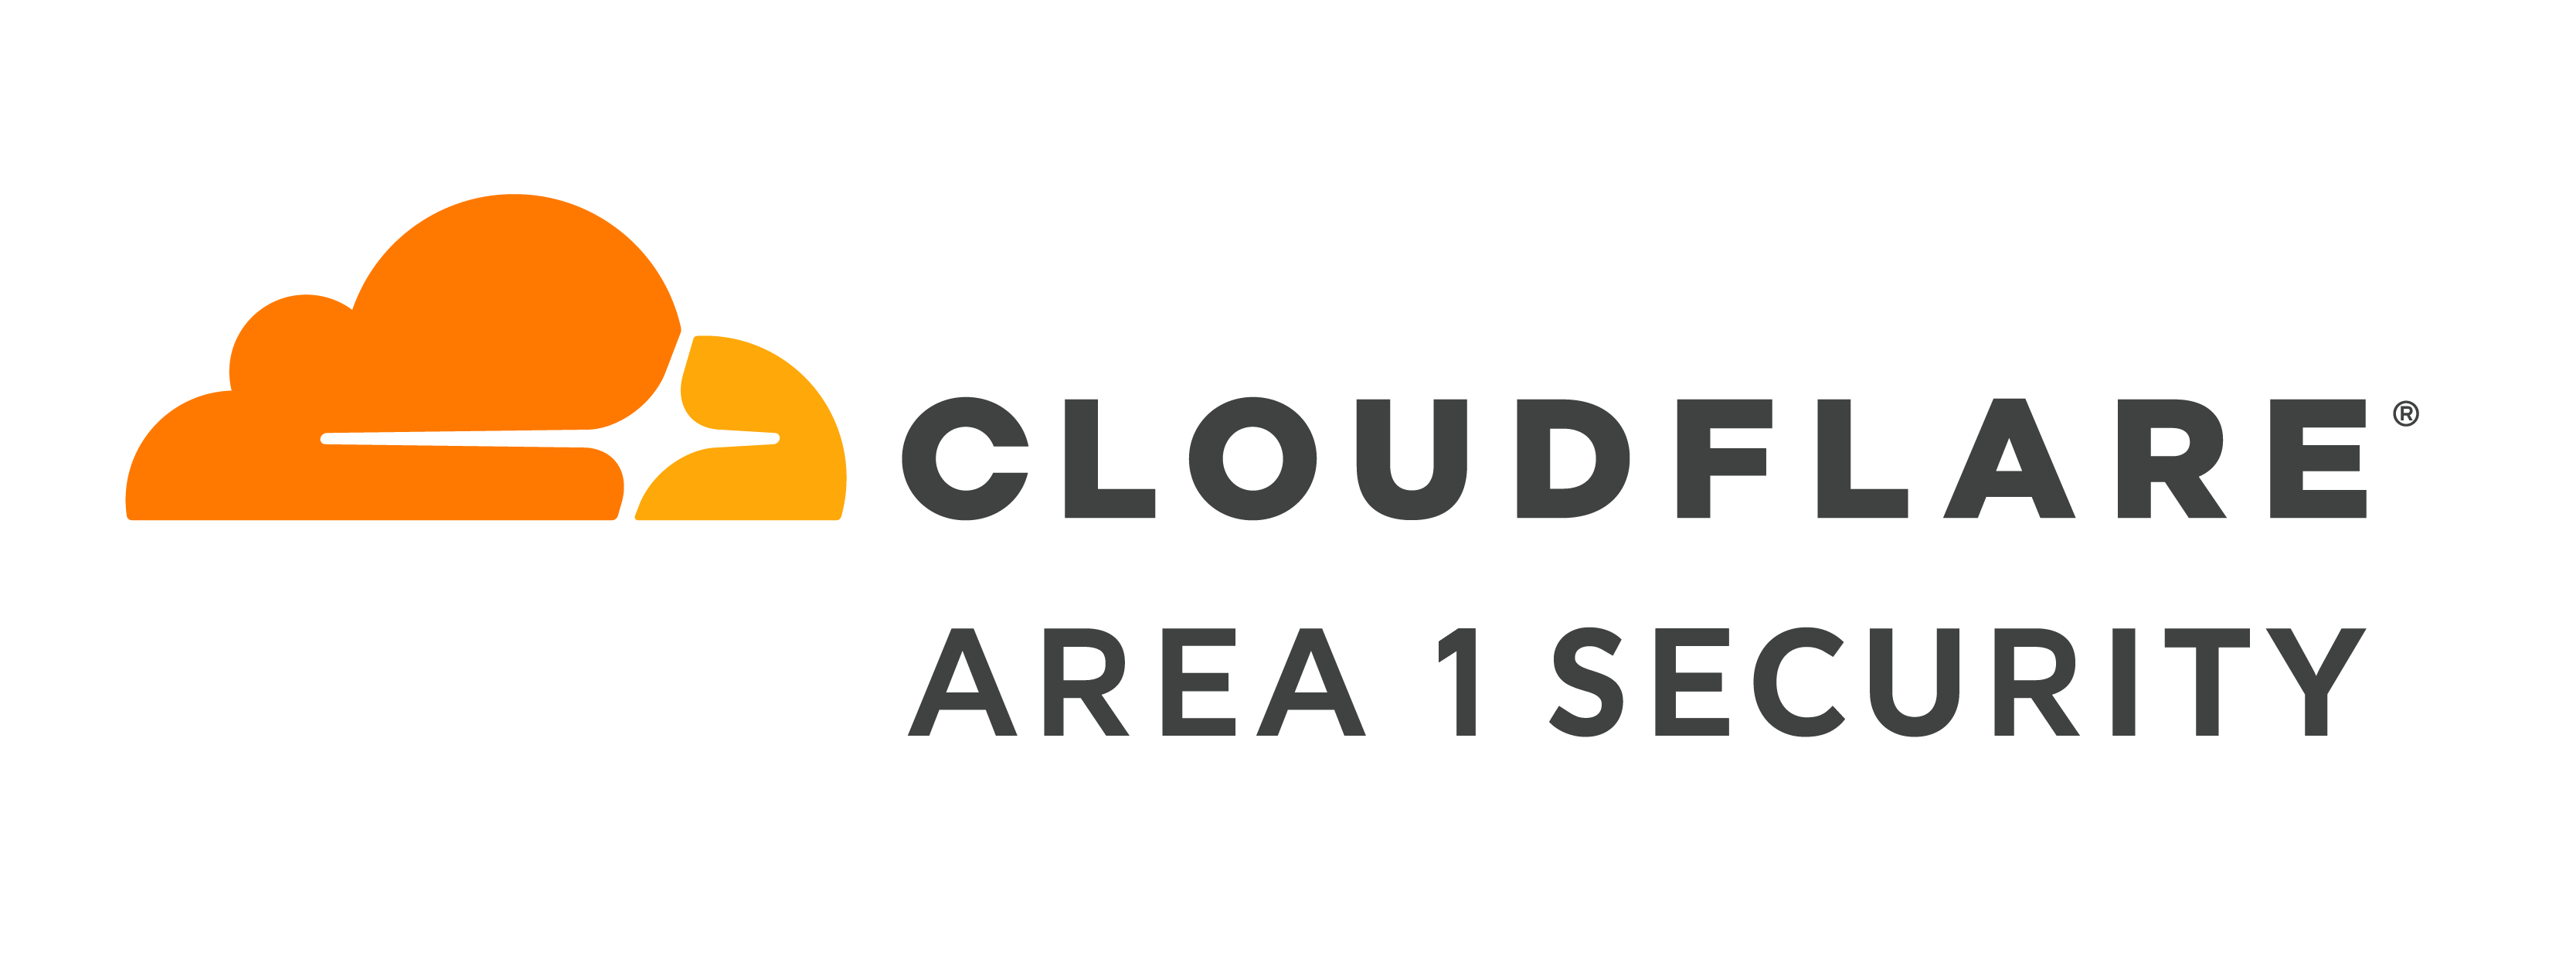 CloudflareA1S_logo (5) (1)